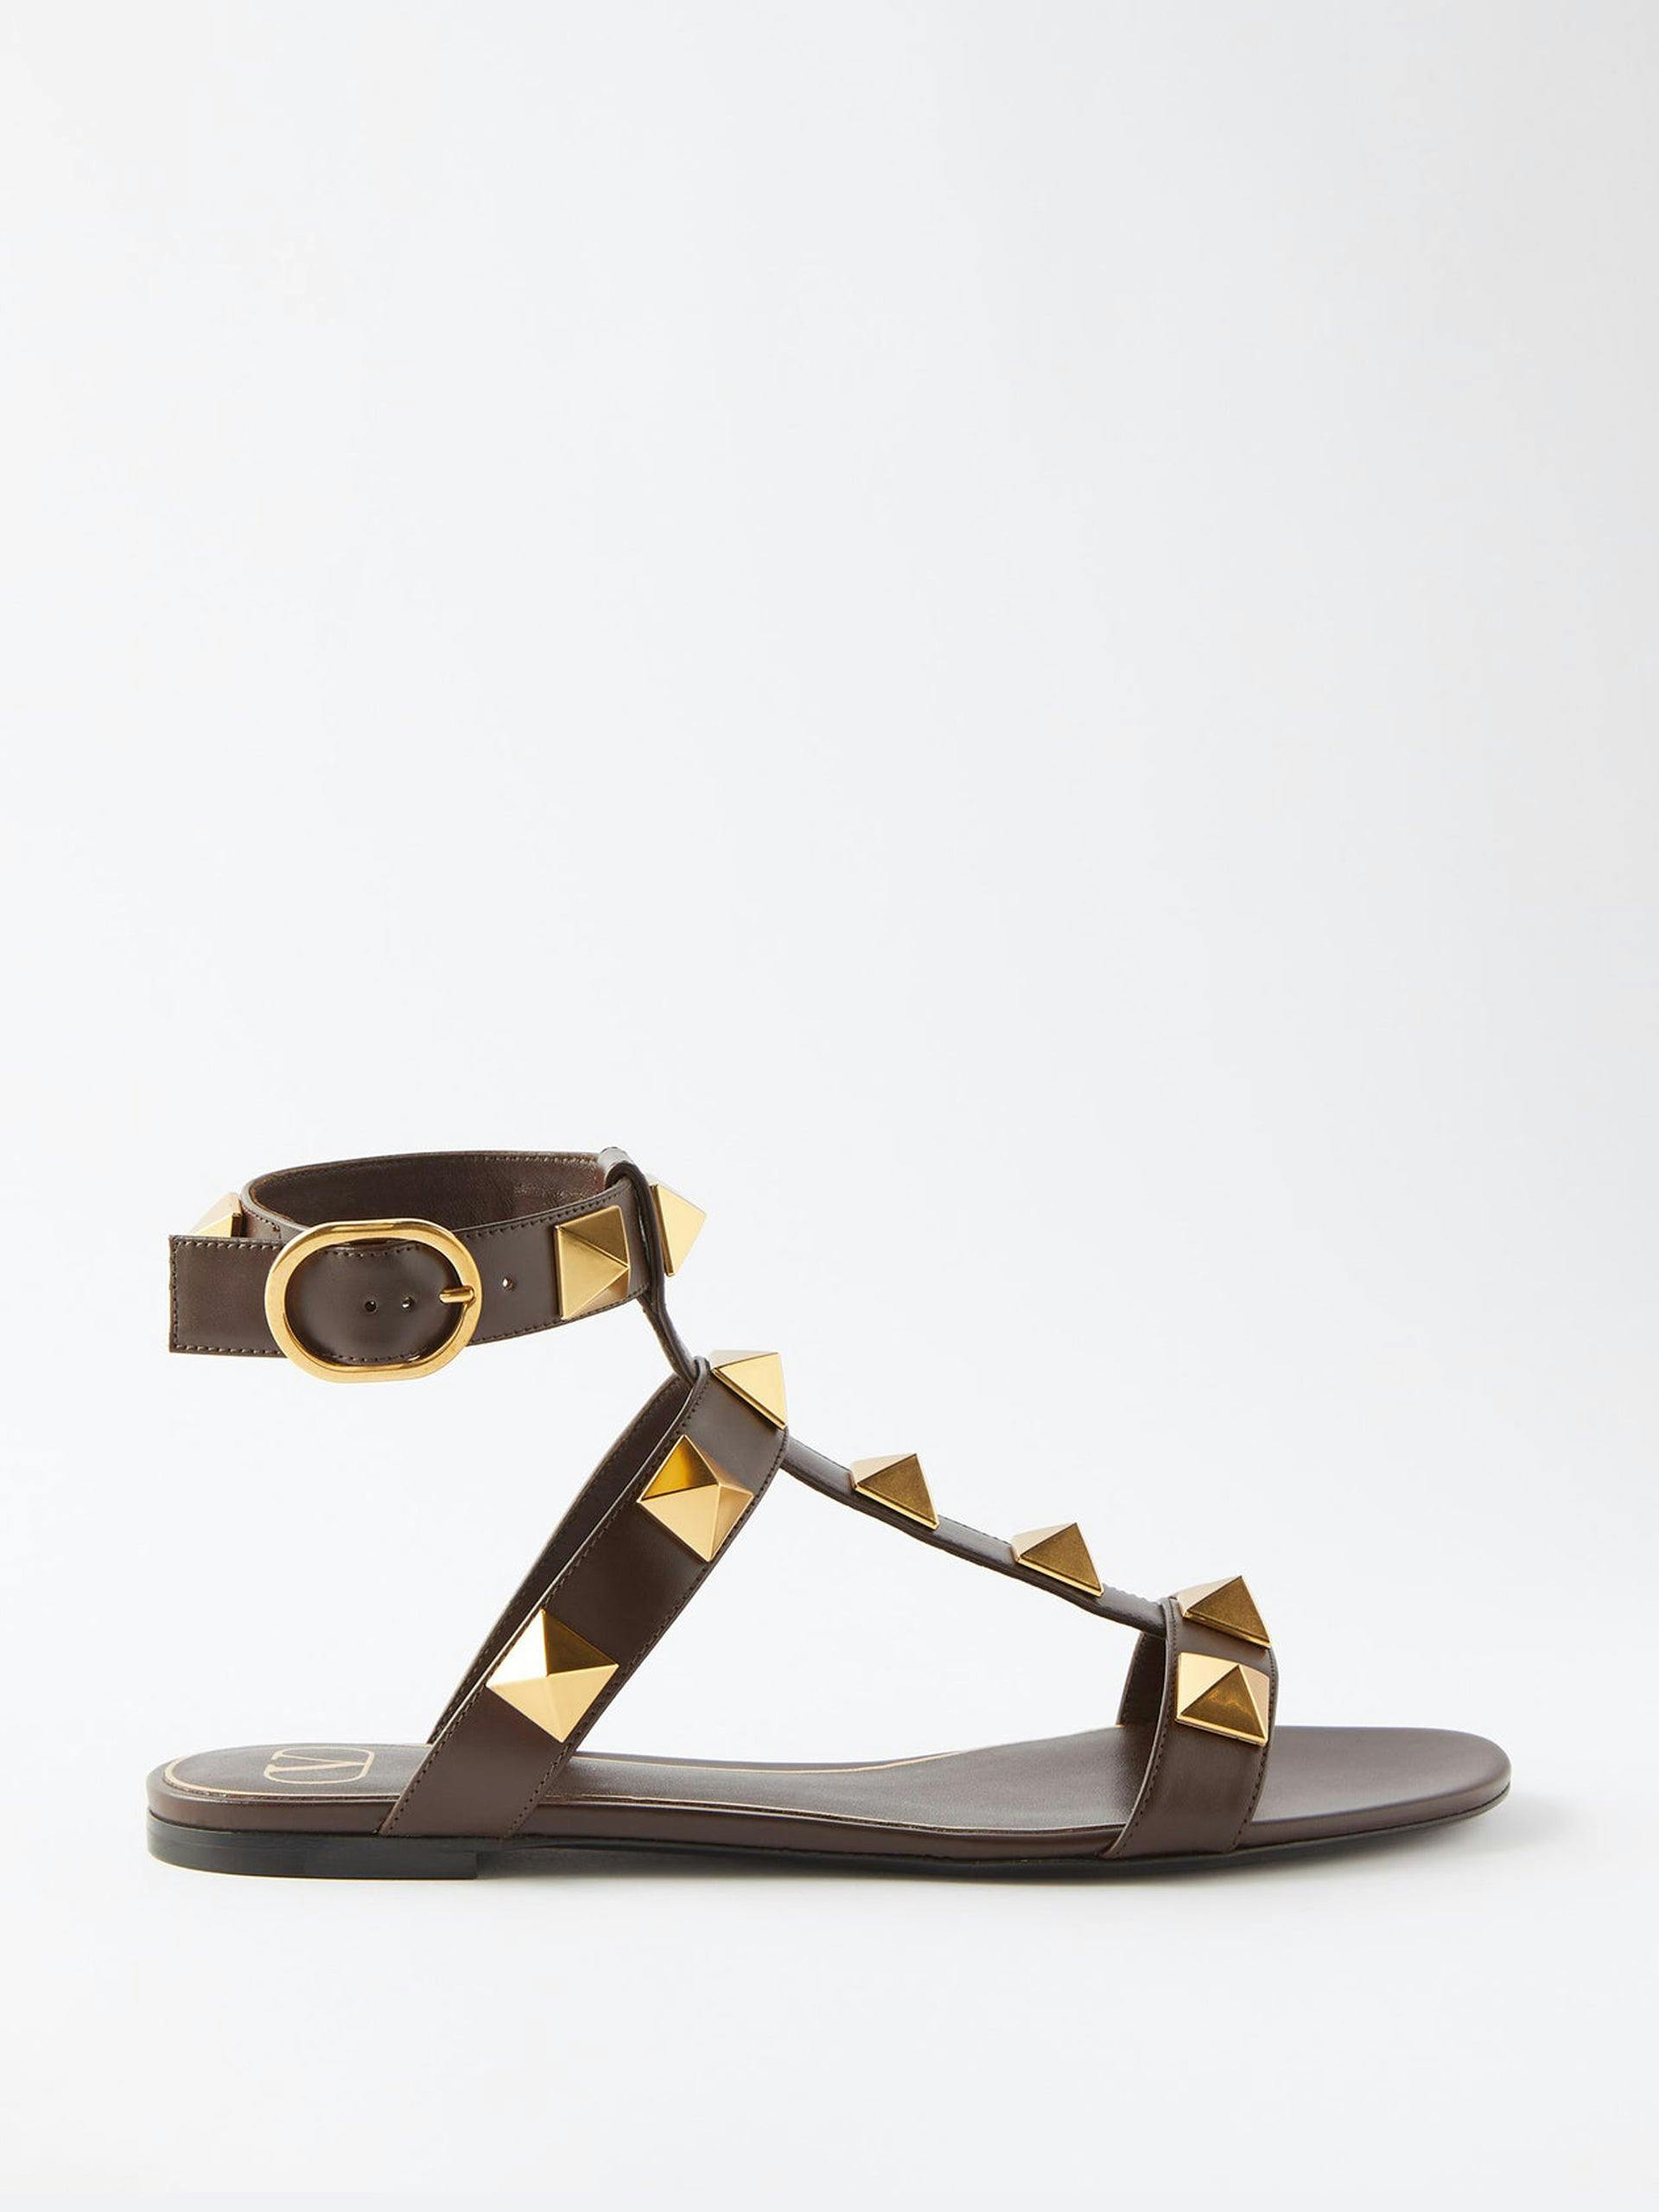 Roman Stud leather sandals